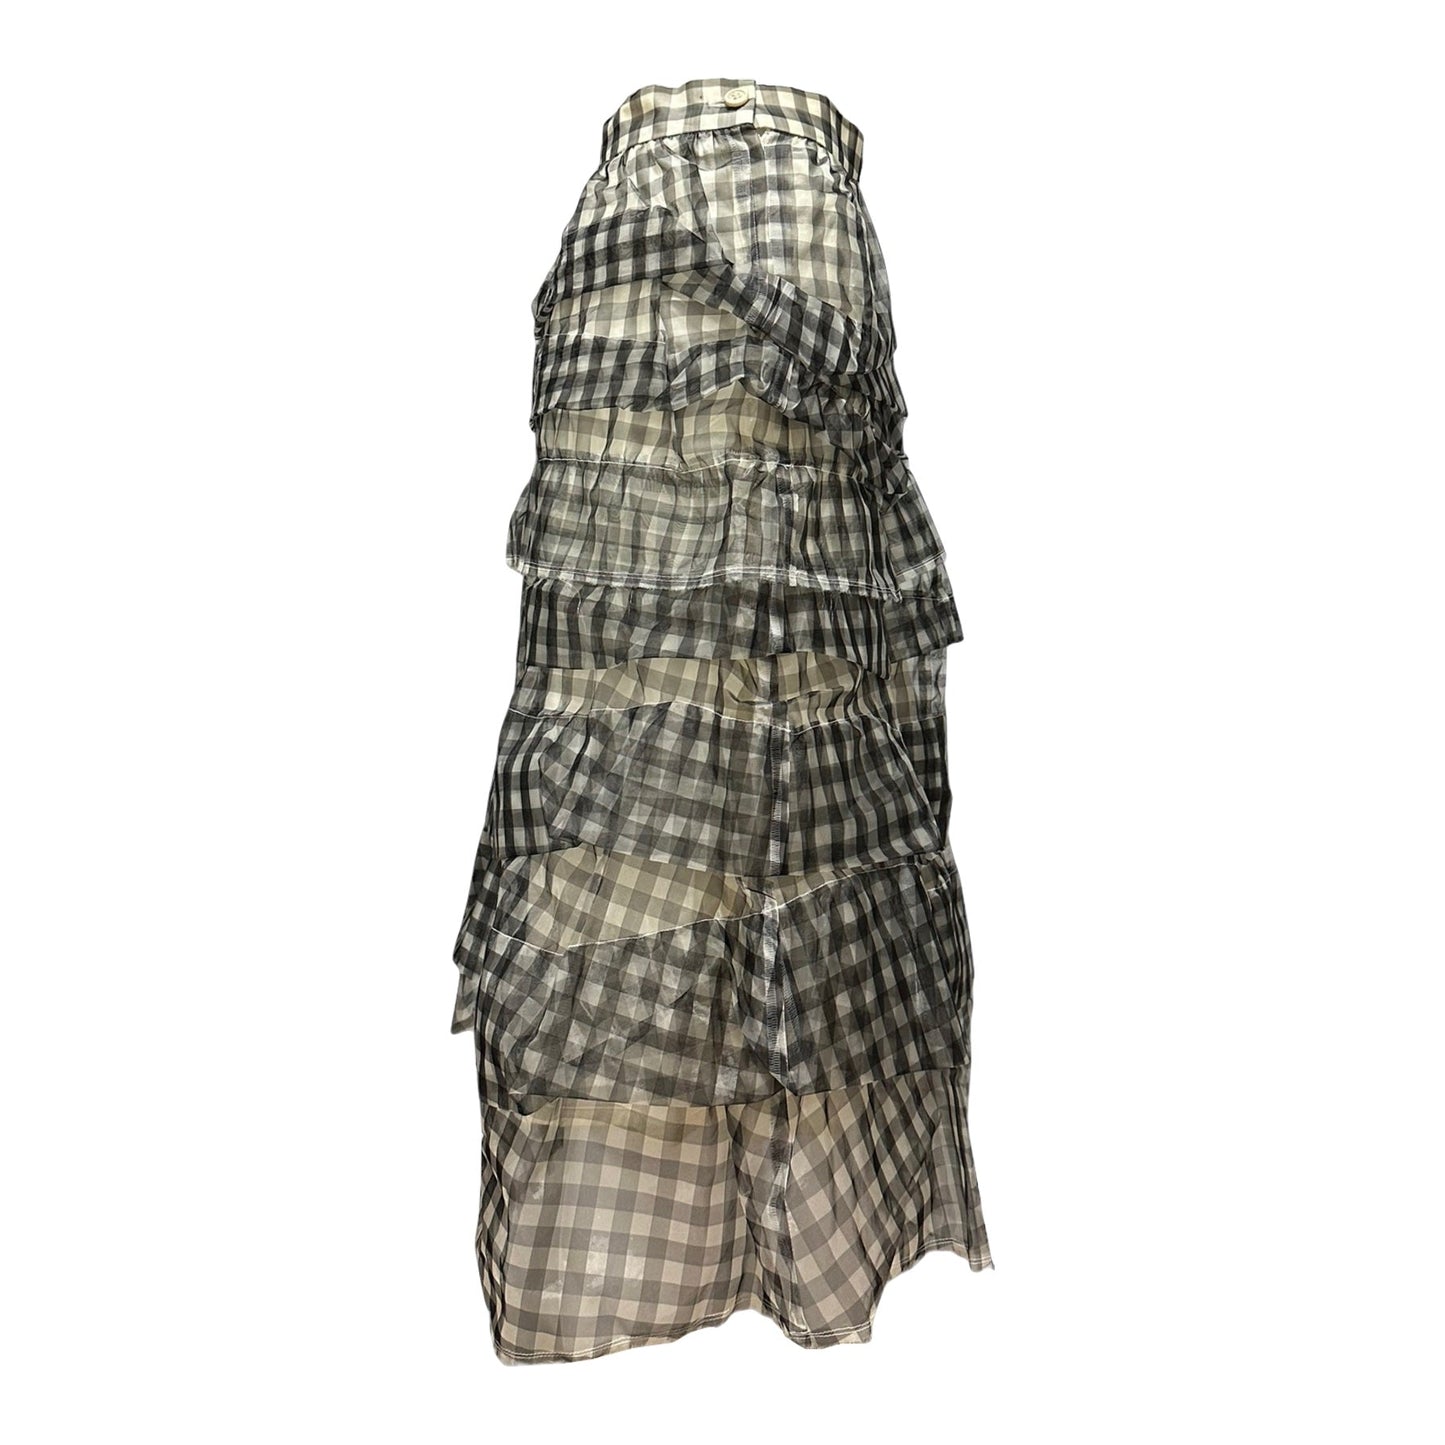 TRICOT COMME DES GARÇONS Checkered Flared Midi Skirt